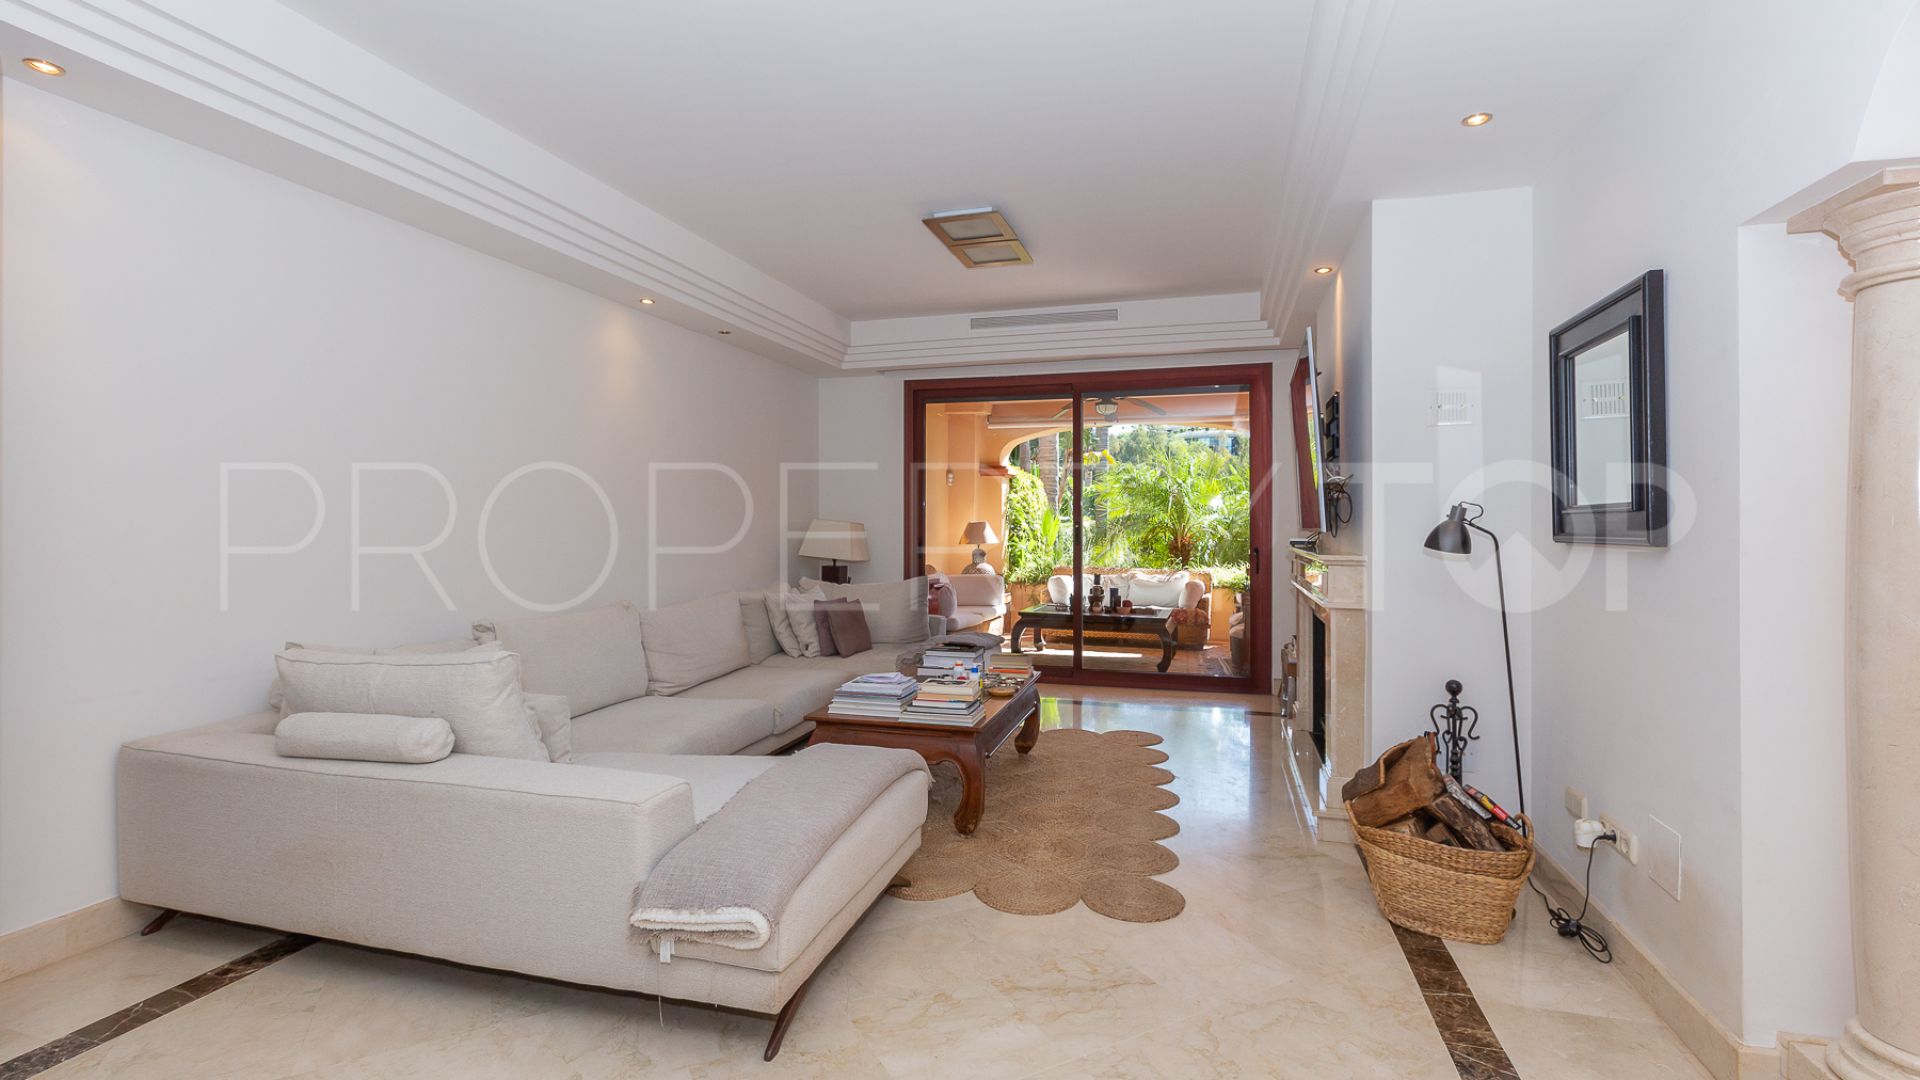 For sale villa in La Alzambra with 5 bedrooms